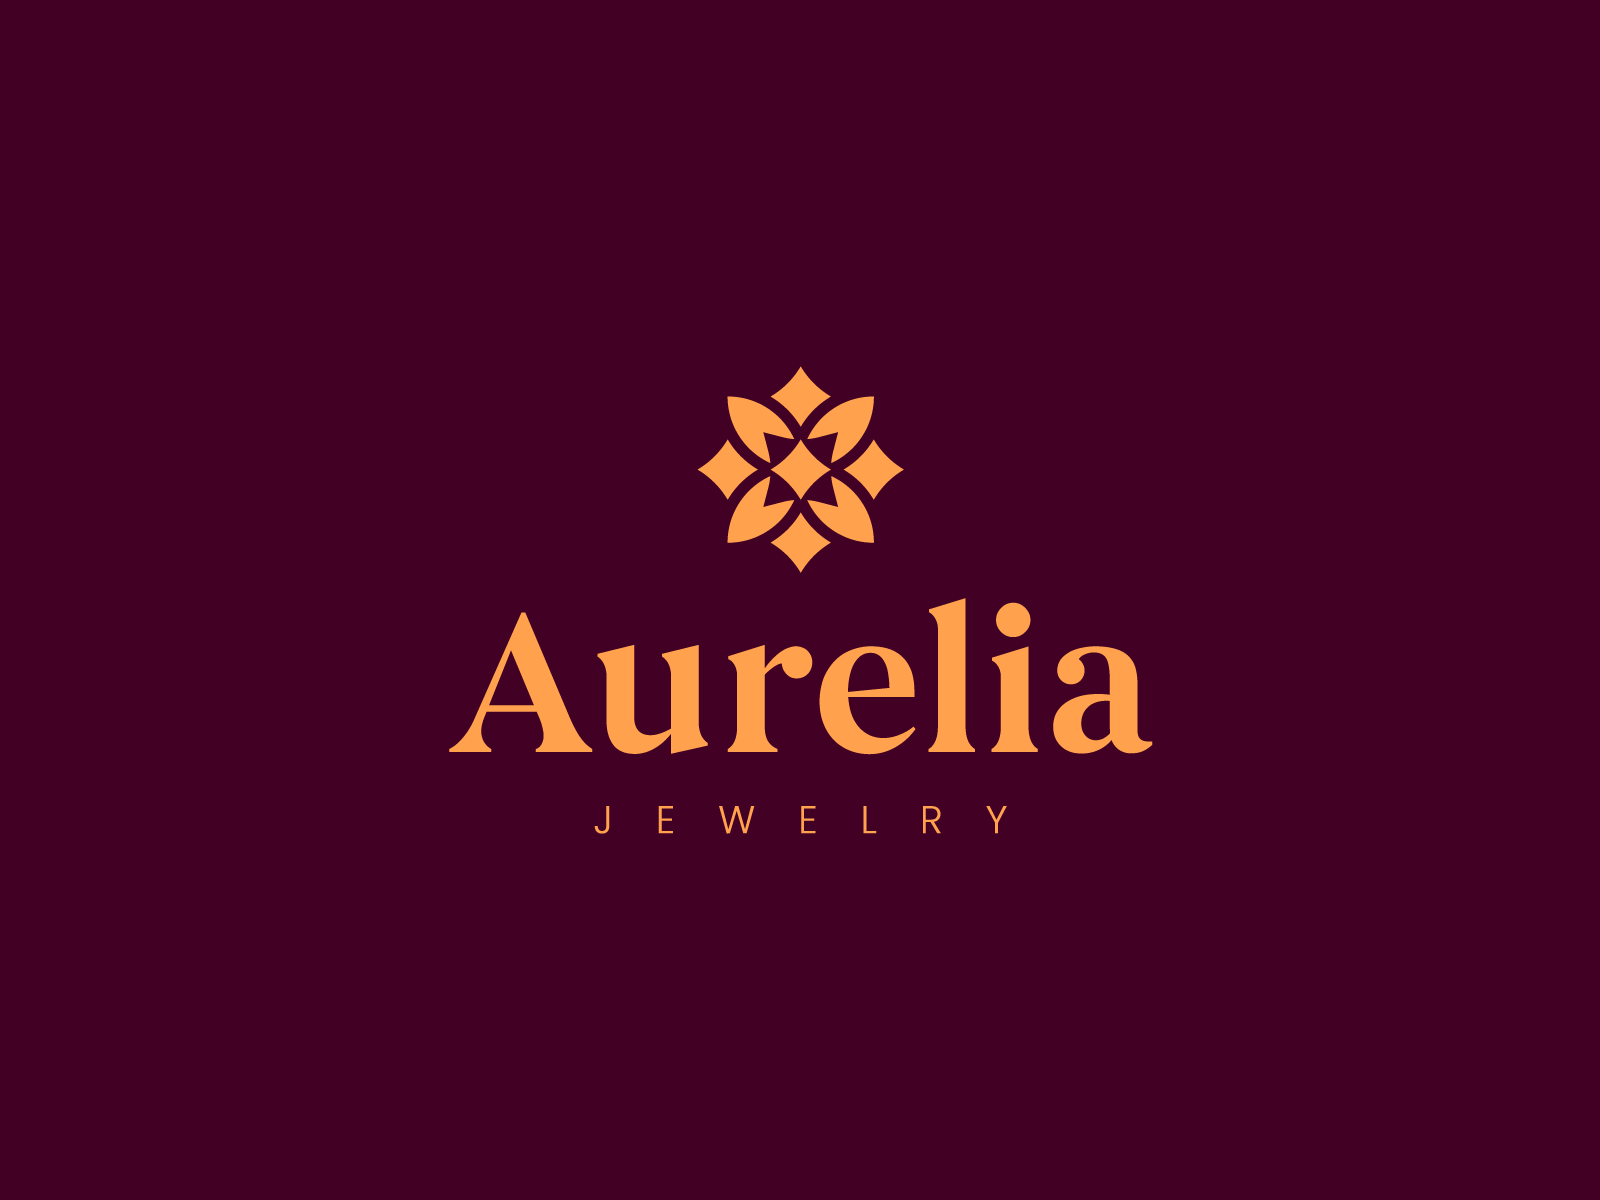 Aurelia Logotype Projects :: Photos, videos, logos, illustrations and  branding :: Behance